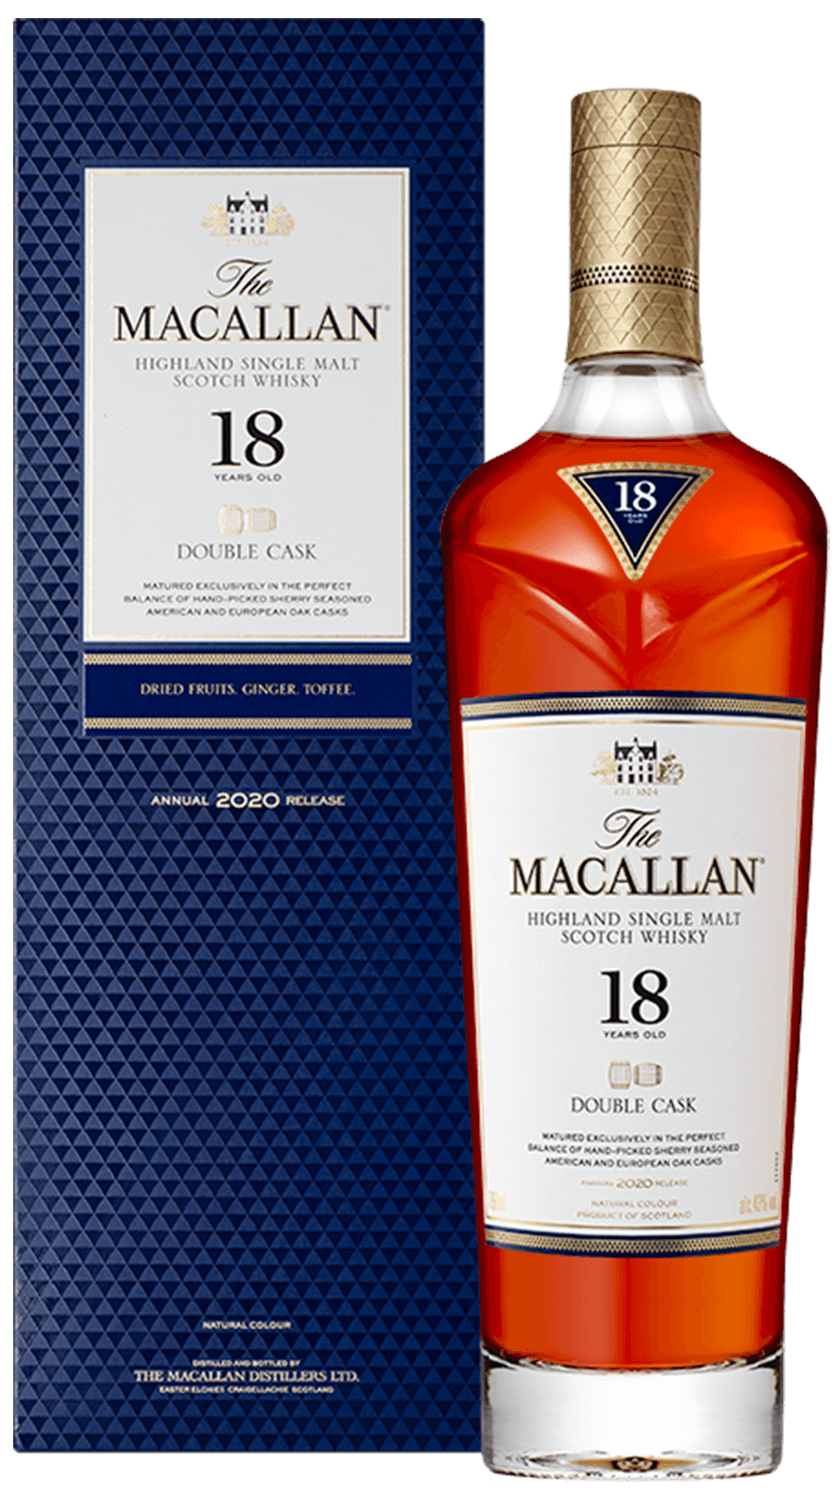 Macallan Double Cask 18 y.o. Highland single malt scotch whisky (gift box)